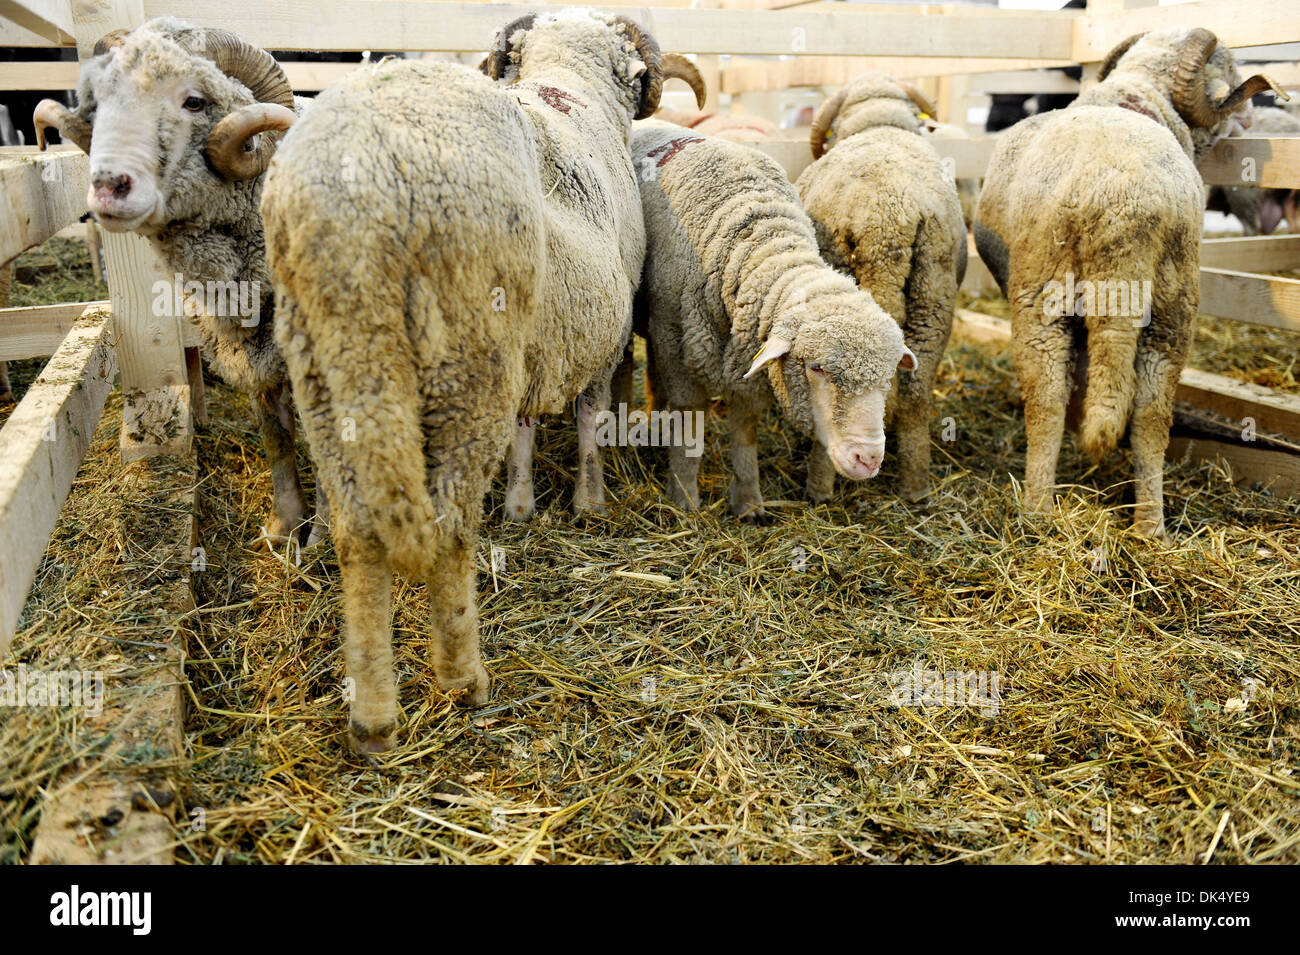 Several sheeps inside a sheep farm Stock Photo